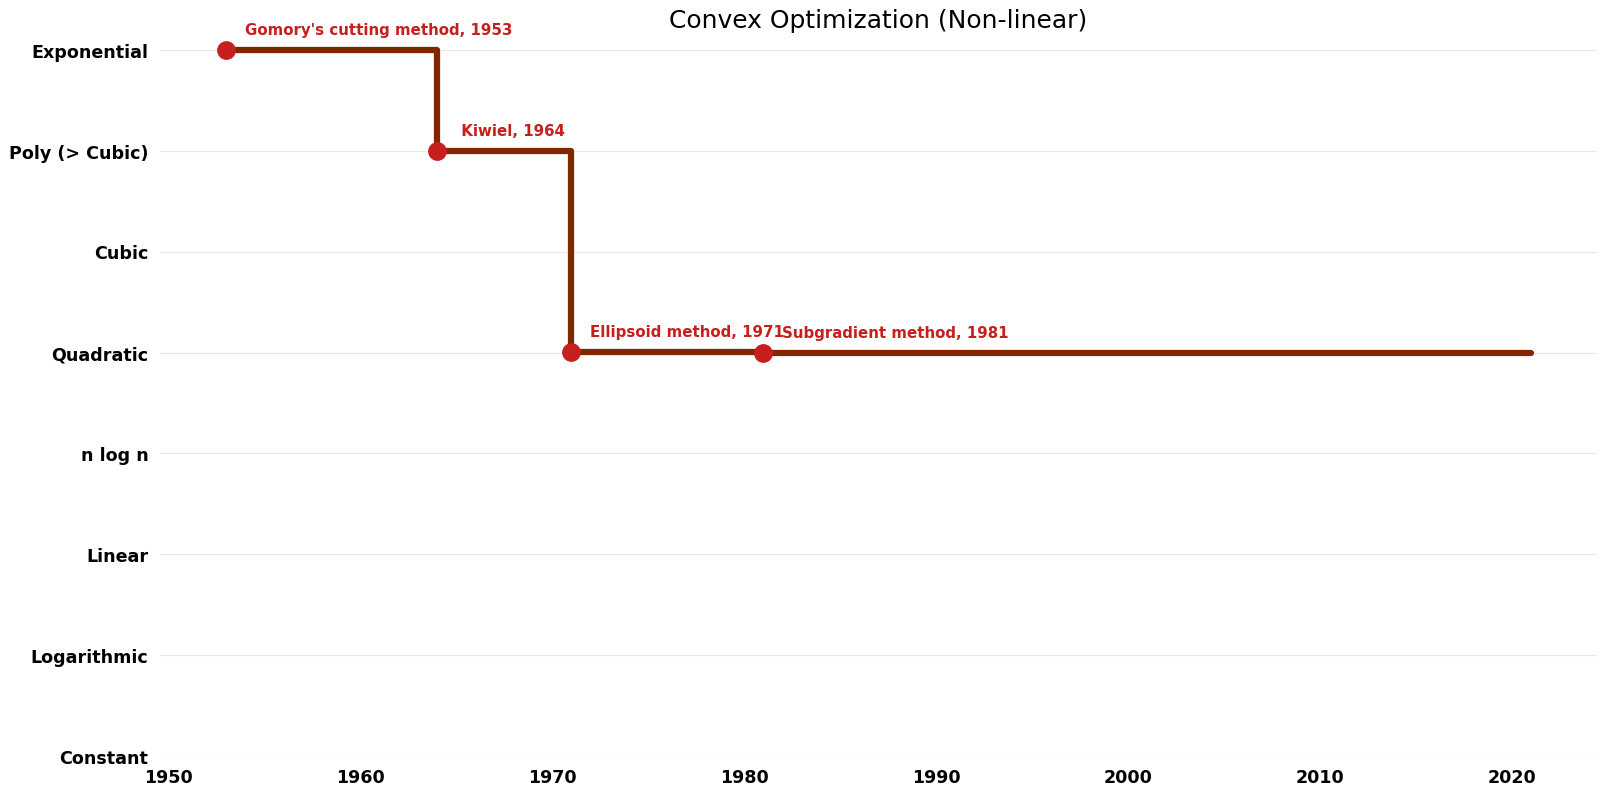 File:Convex Optimization (Non-linear) - Time.png